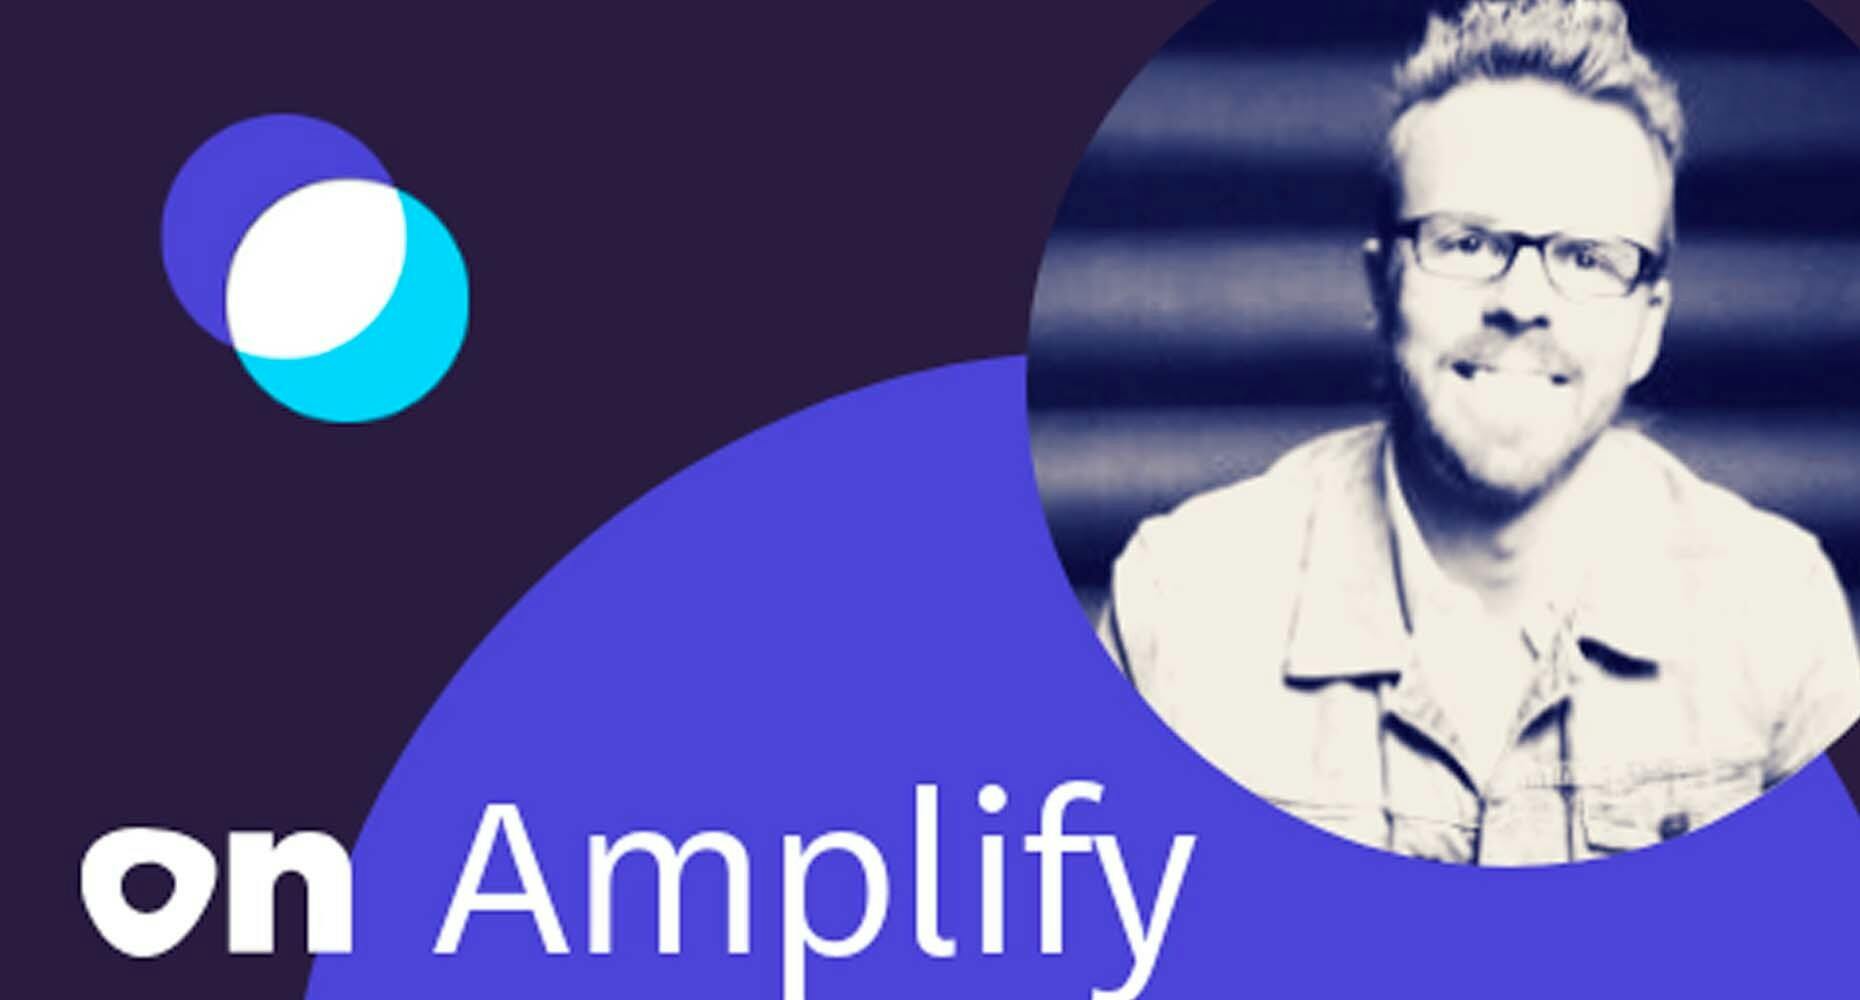 Ryan yander on Amplify